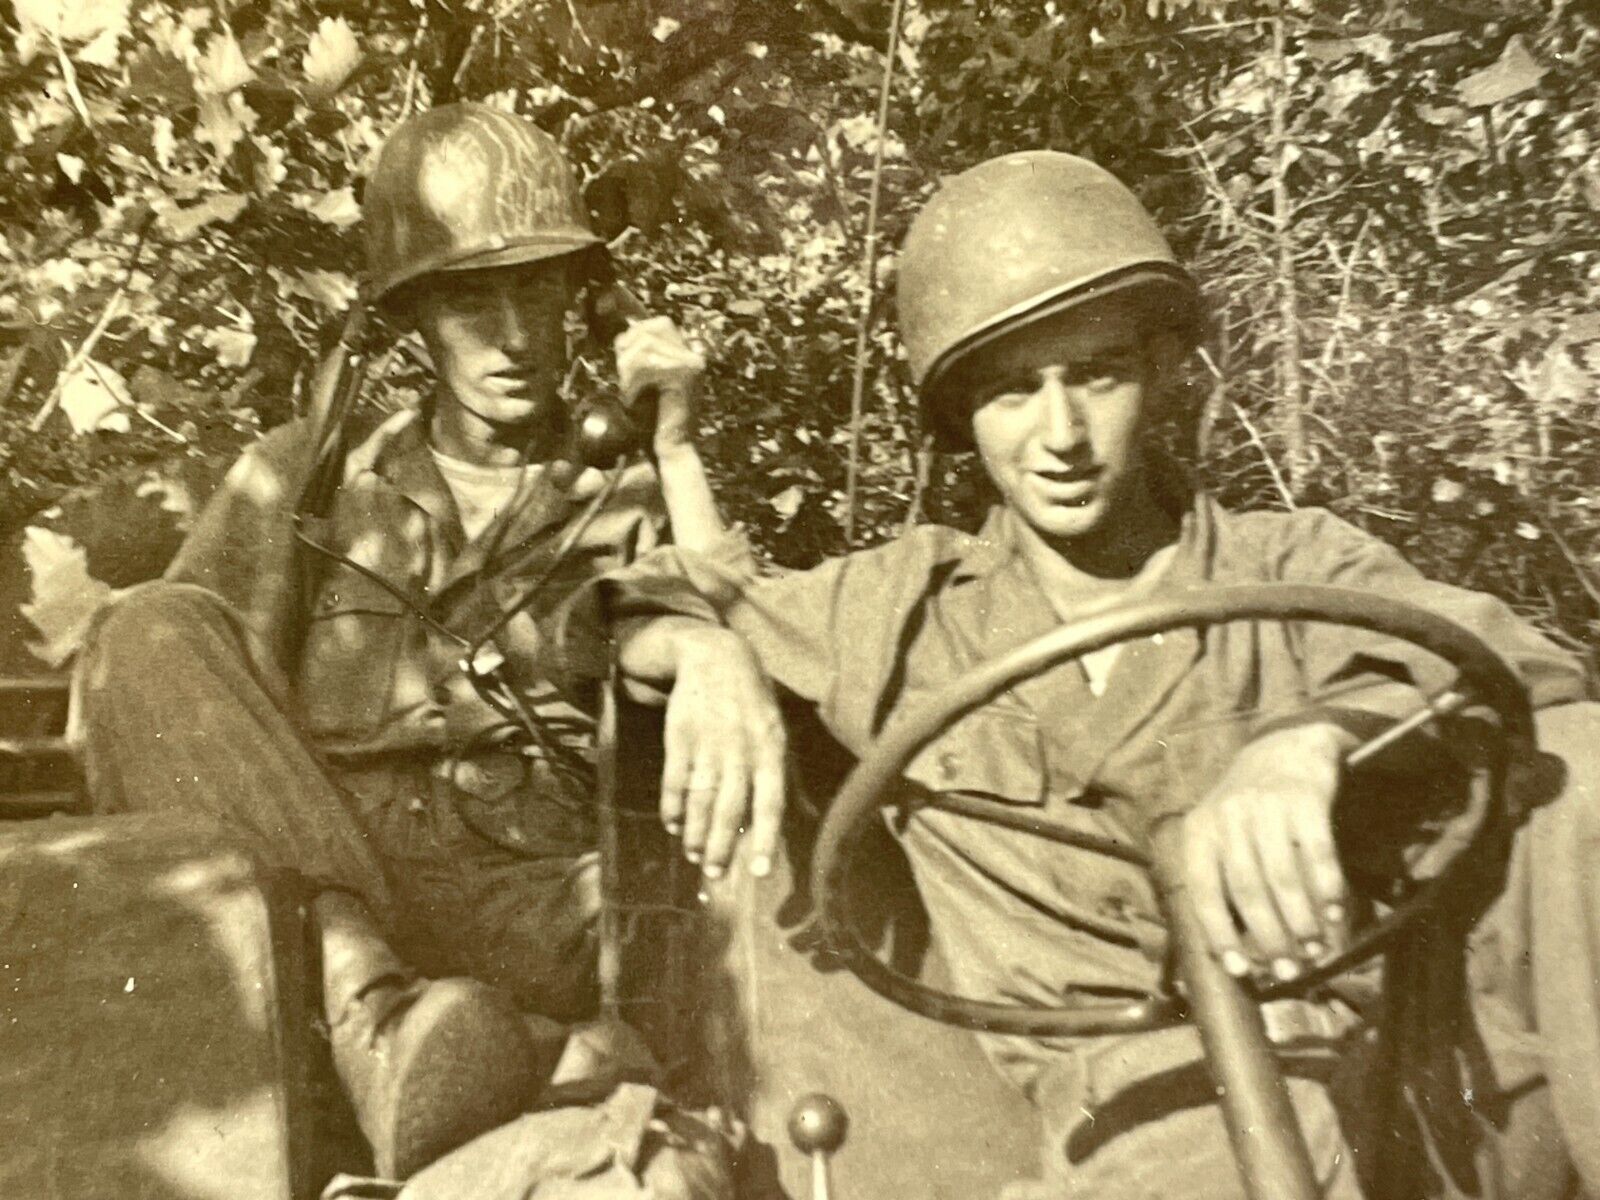 XA Photograph Handsome Military Men On Recon Patrol Jeep Helmets Telephone